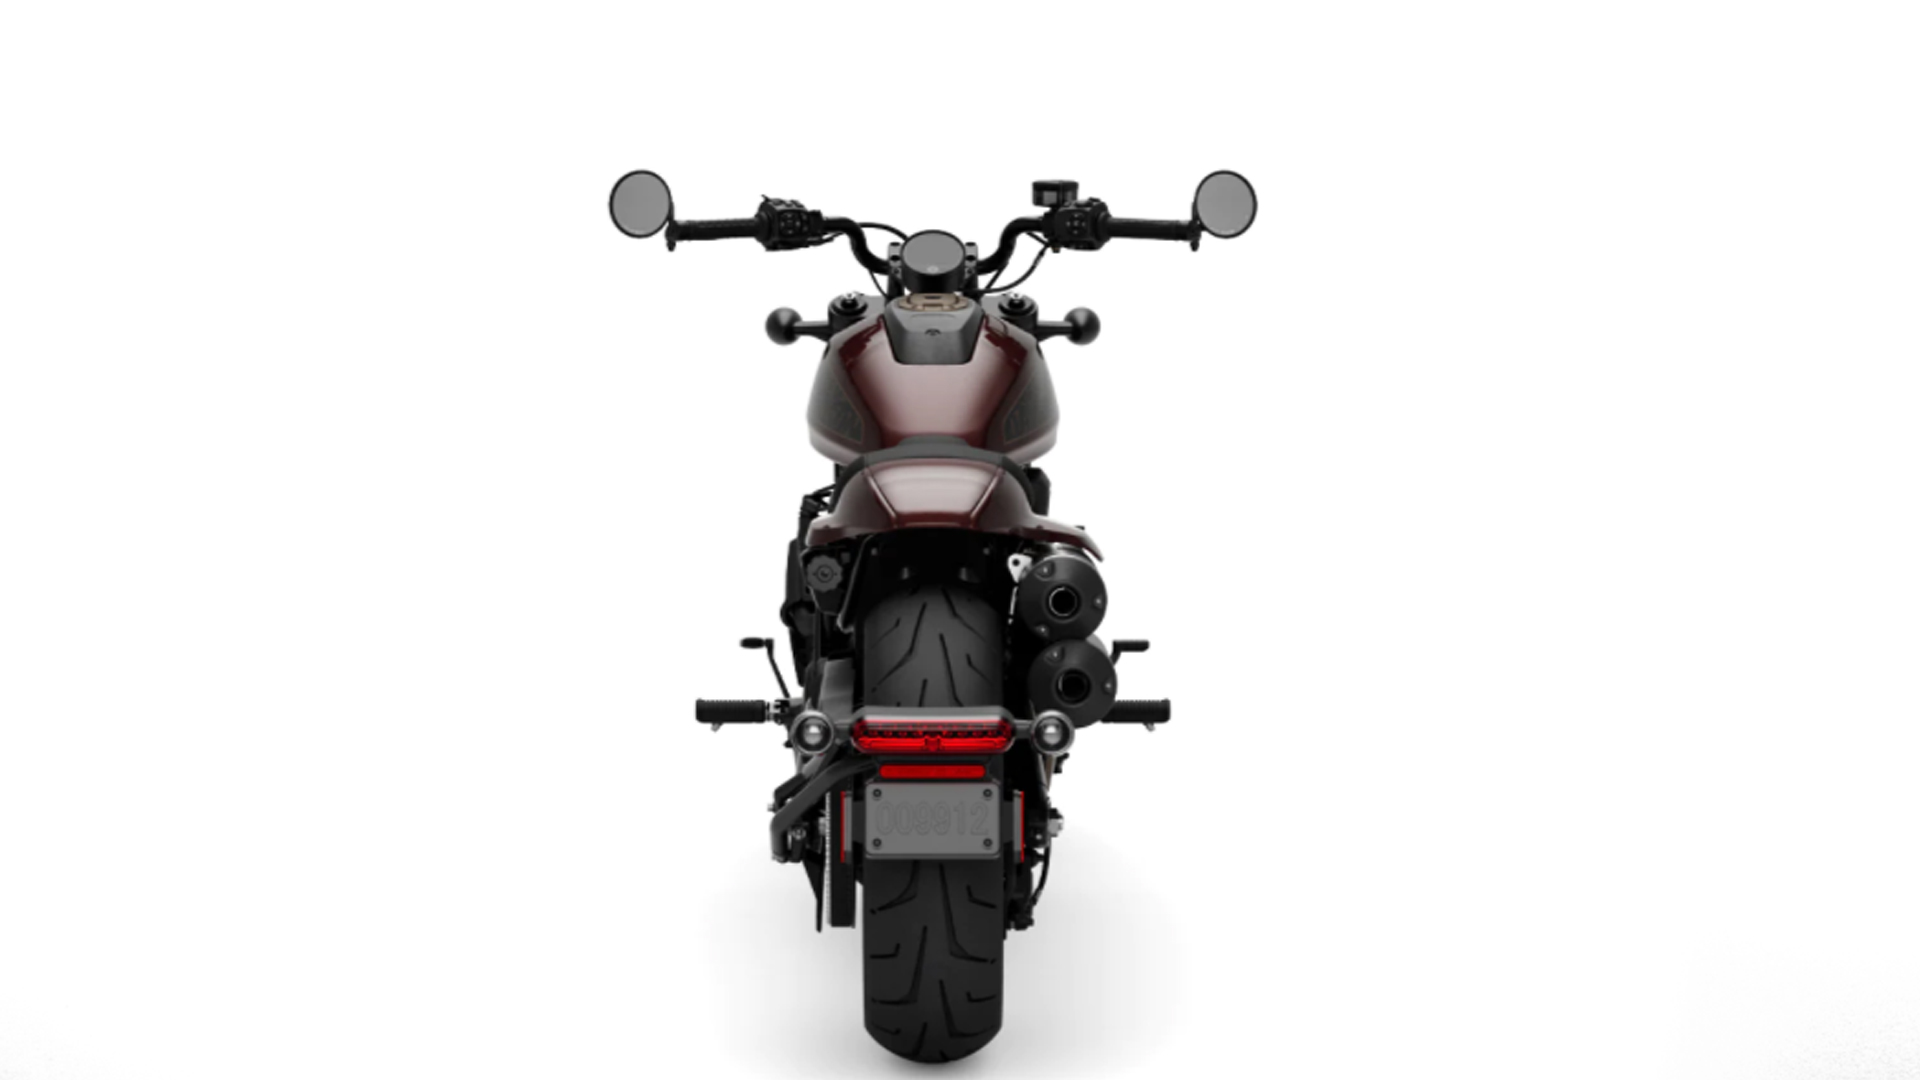 Harley-Davidson Sportster S 2022 STD